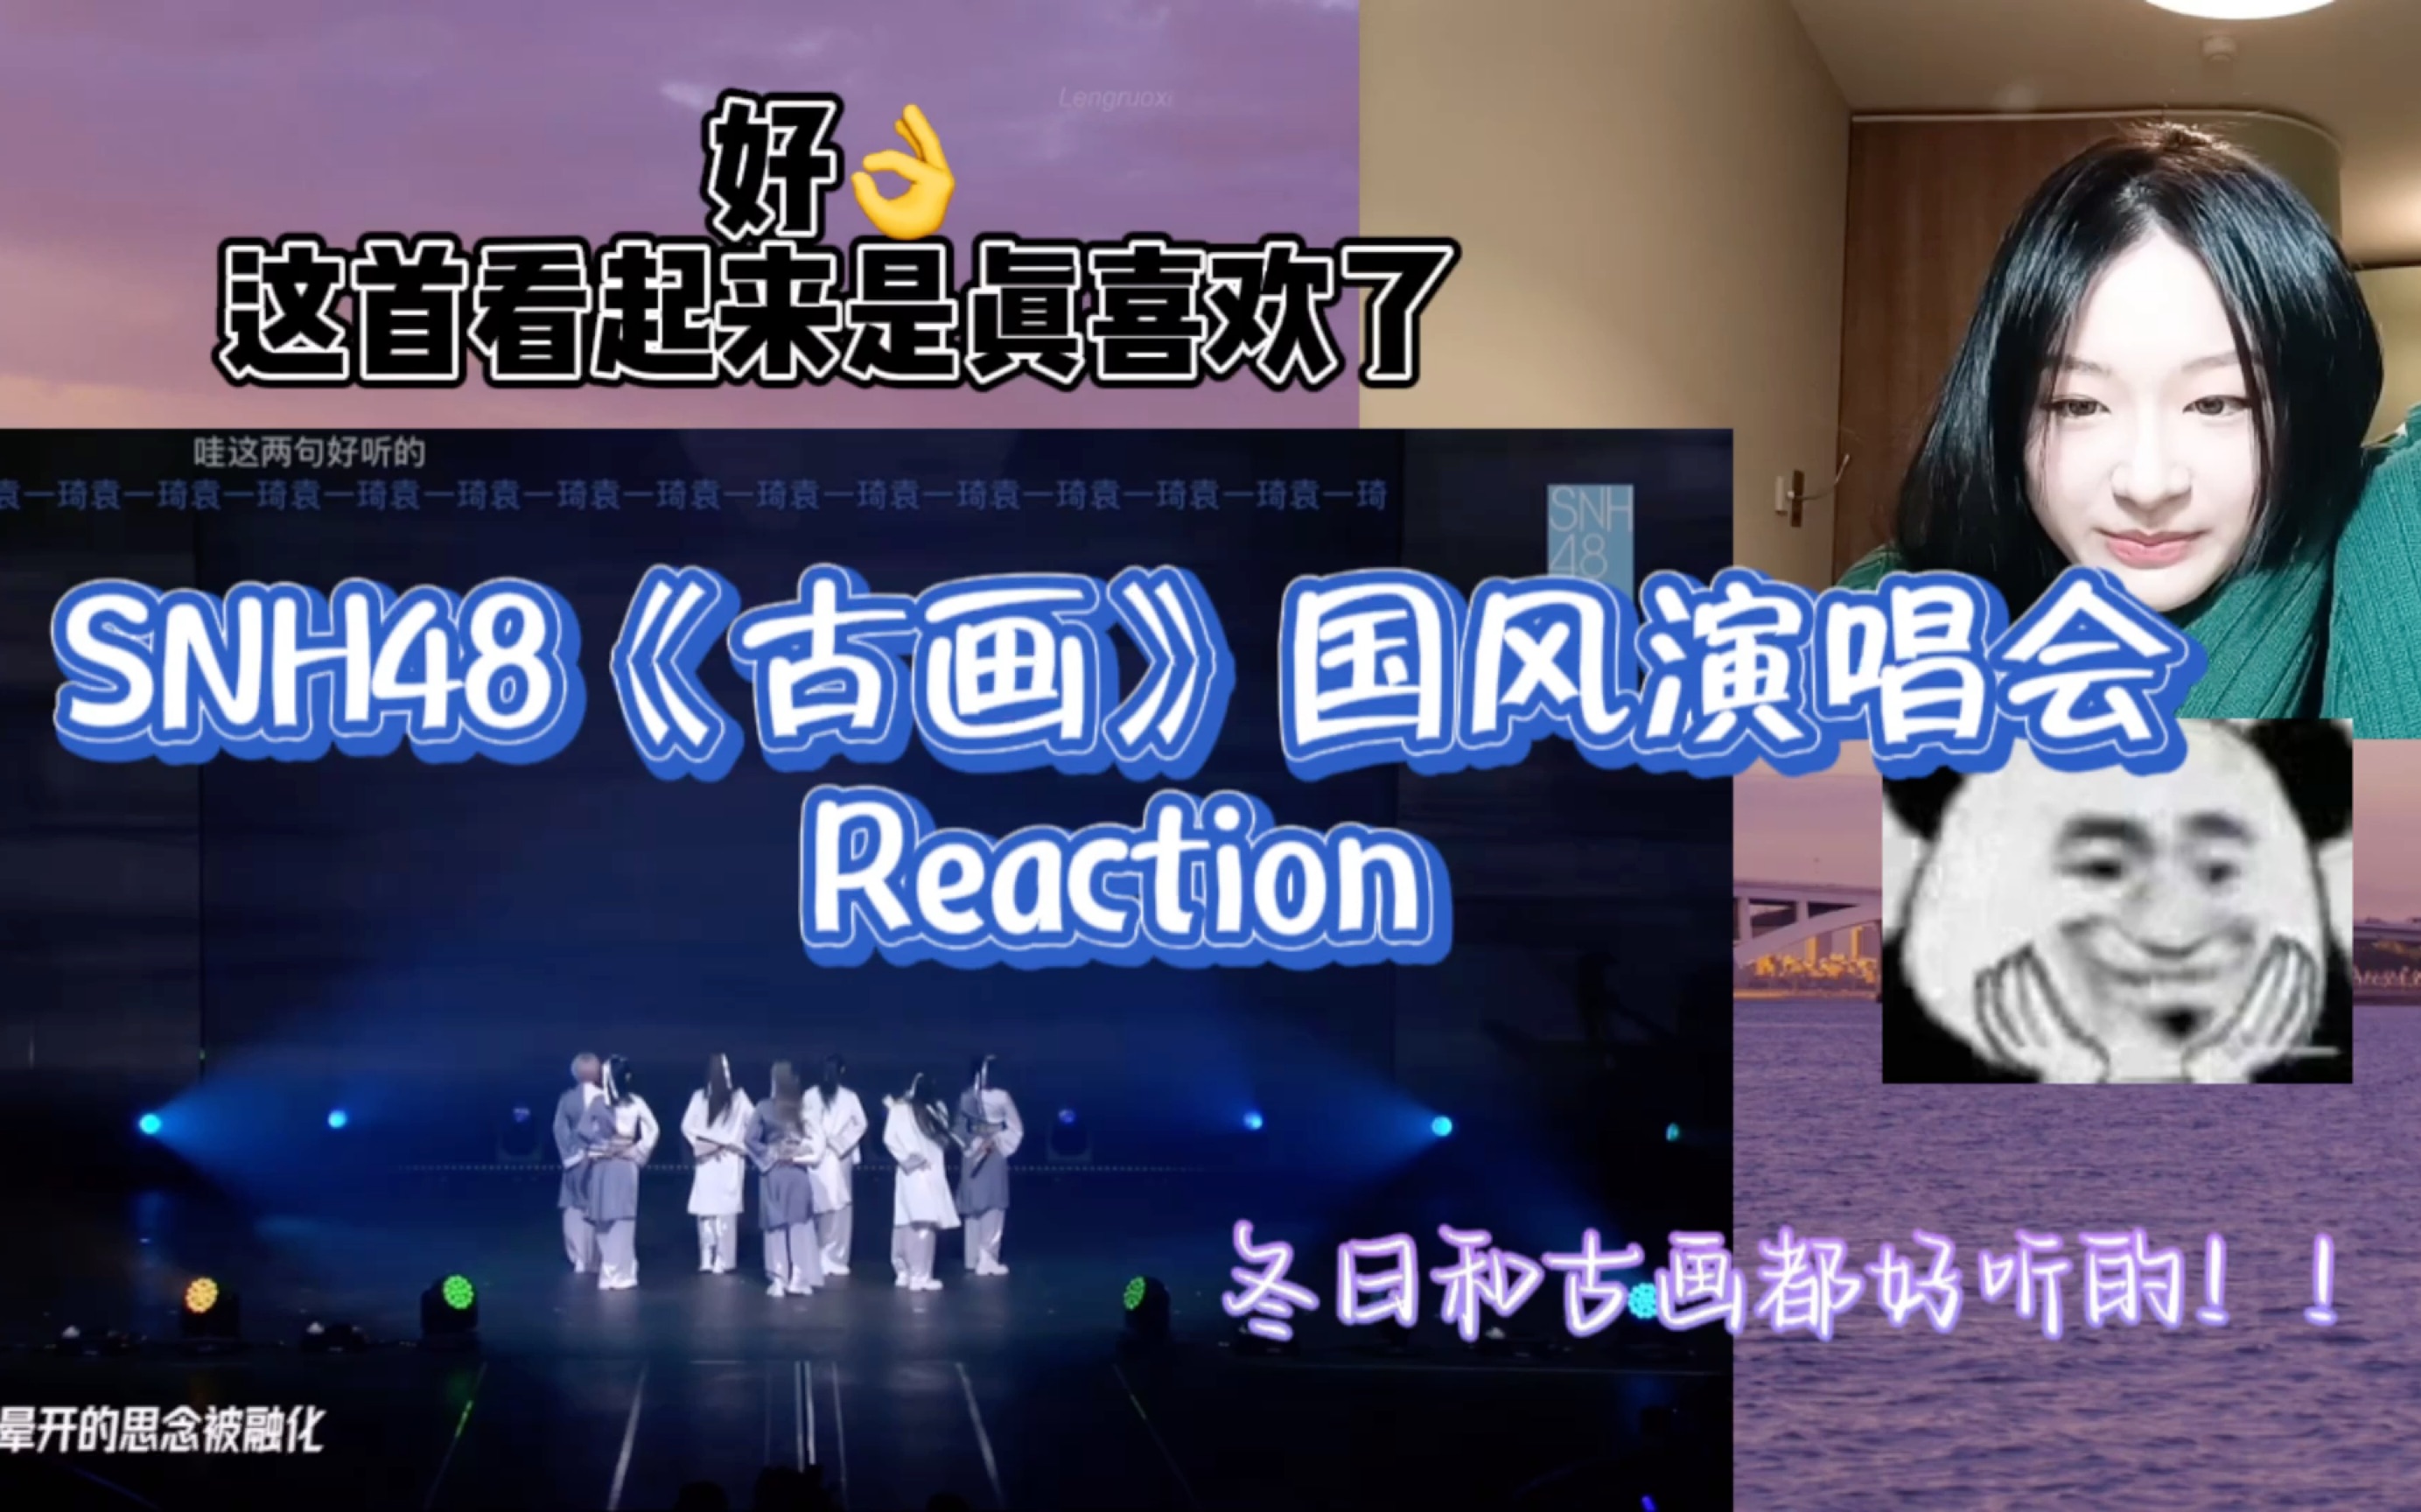 【SNH48 Reaction】《古画》国风演唱会 全场舞台｜这场狠狠get到了杨冰怡！！